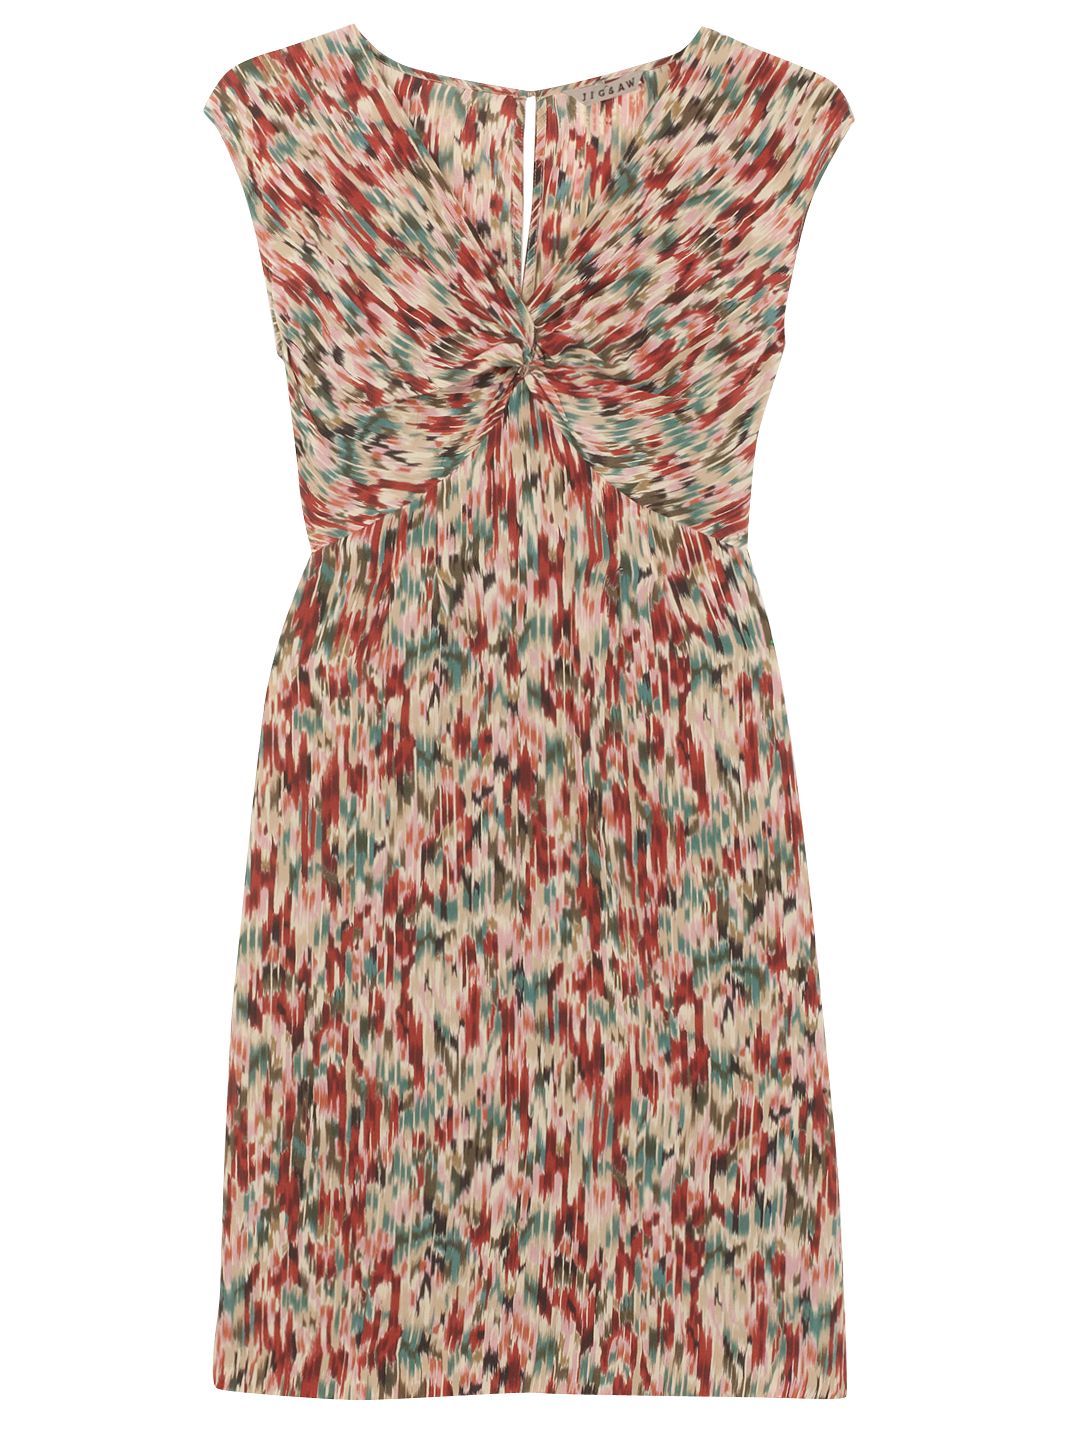 Jigsaw Blurred Floral Print Dress, Plum at John Lewis